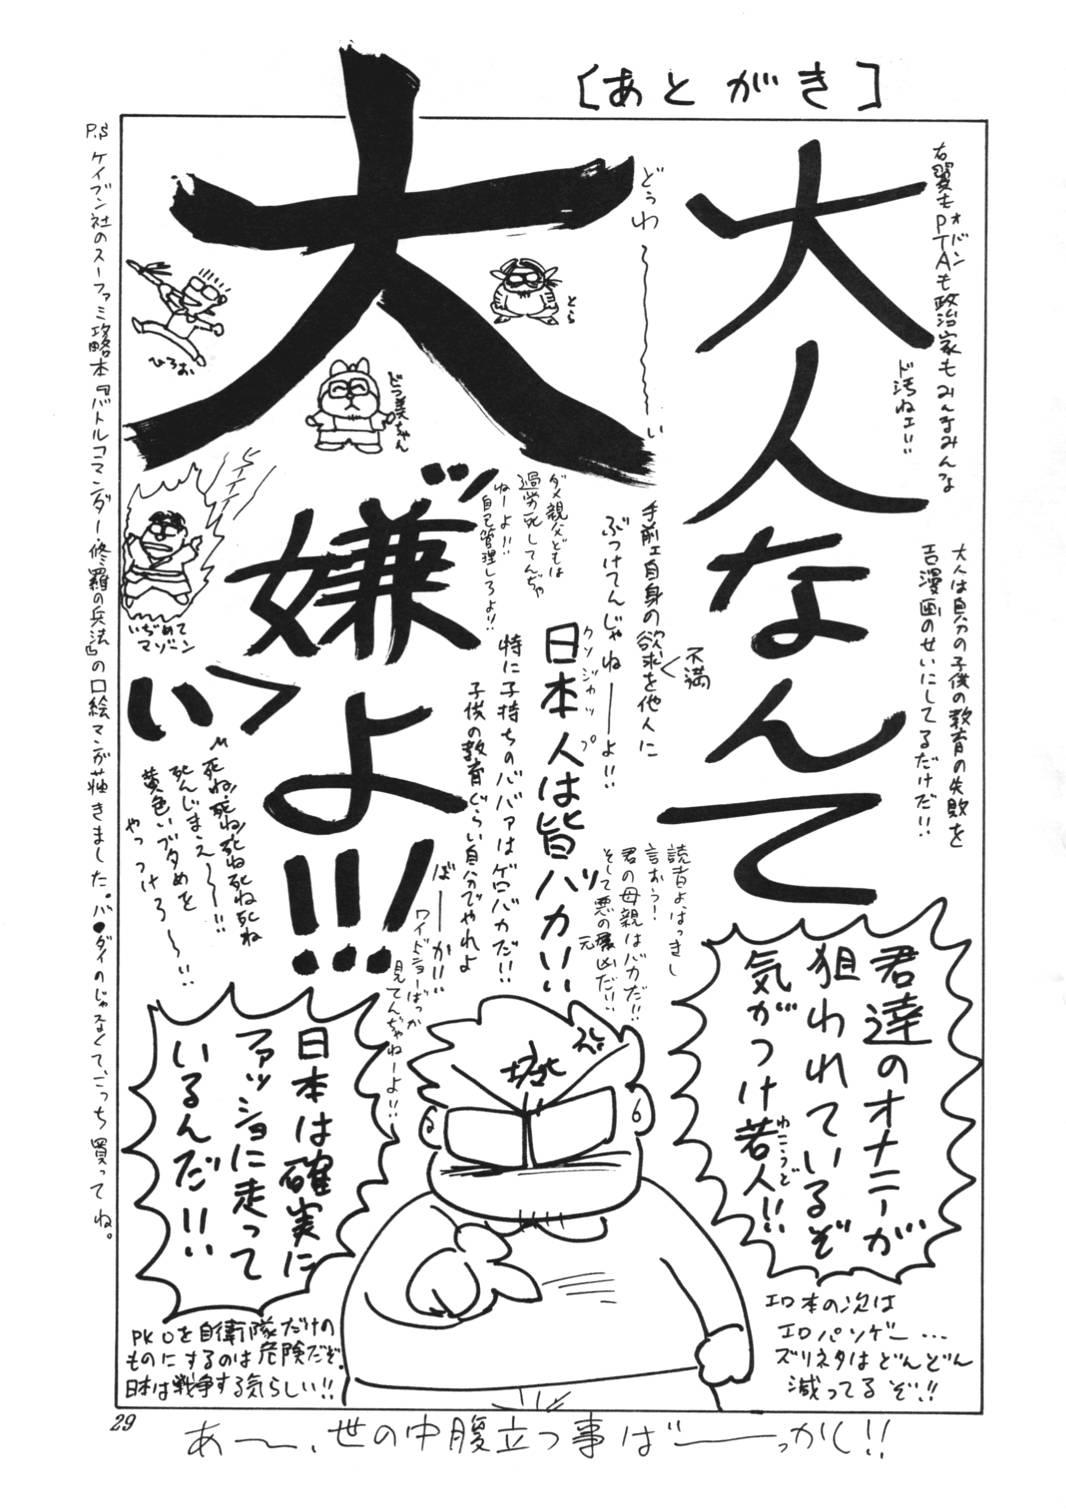 AOI Tsukushi Emergency H3 SHION 1989 28